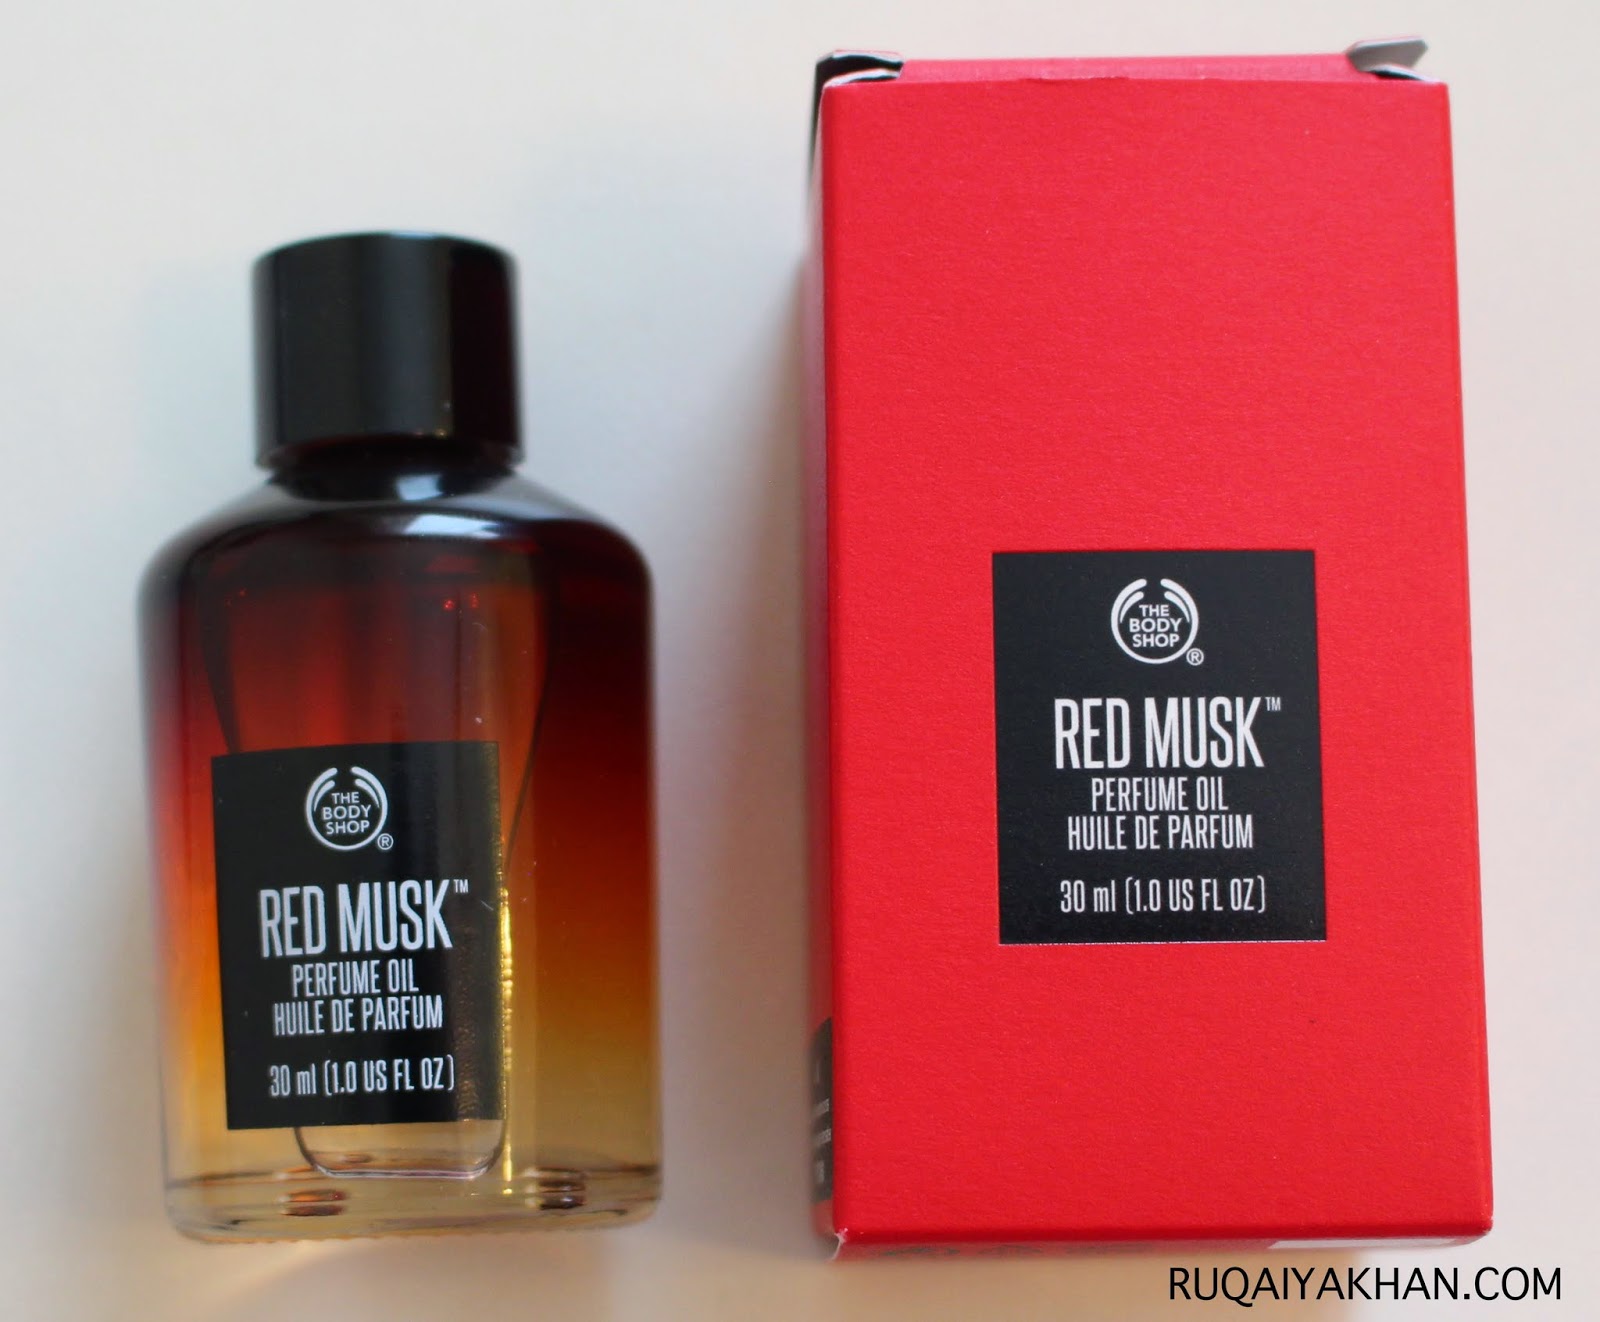 afsked bekendtskab aluminium Ruqaiya Khan: RED MUSK Perfume Oil by The Body Shop Review